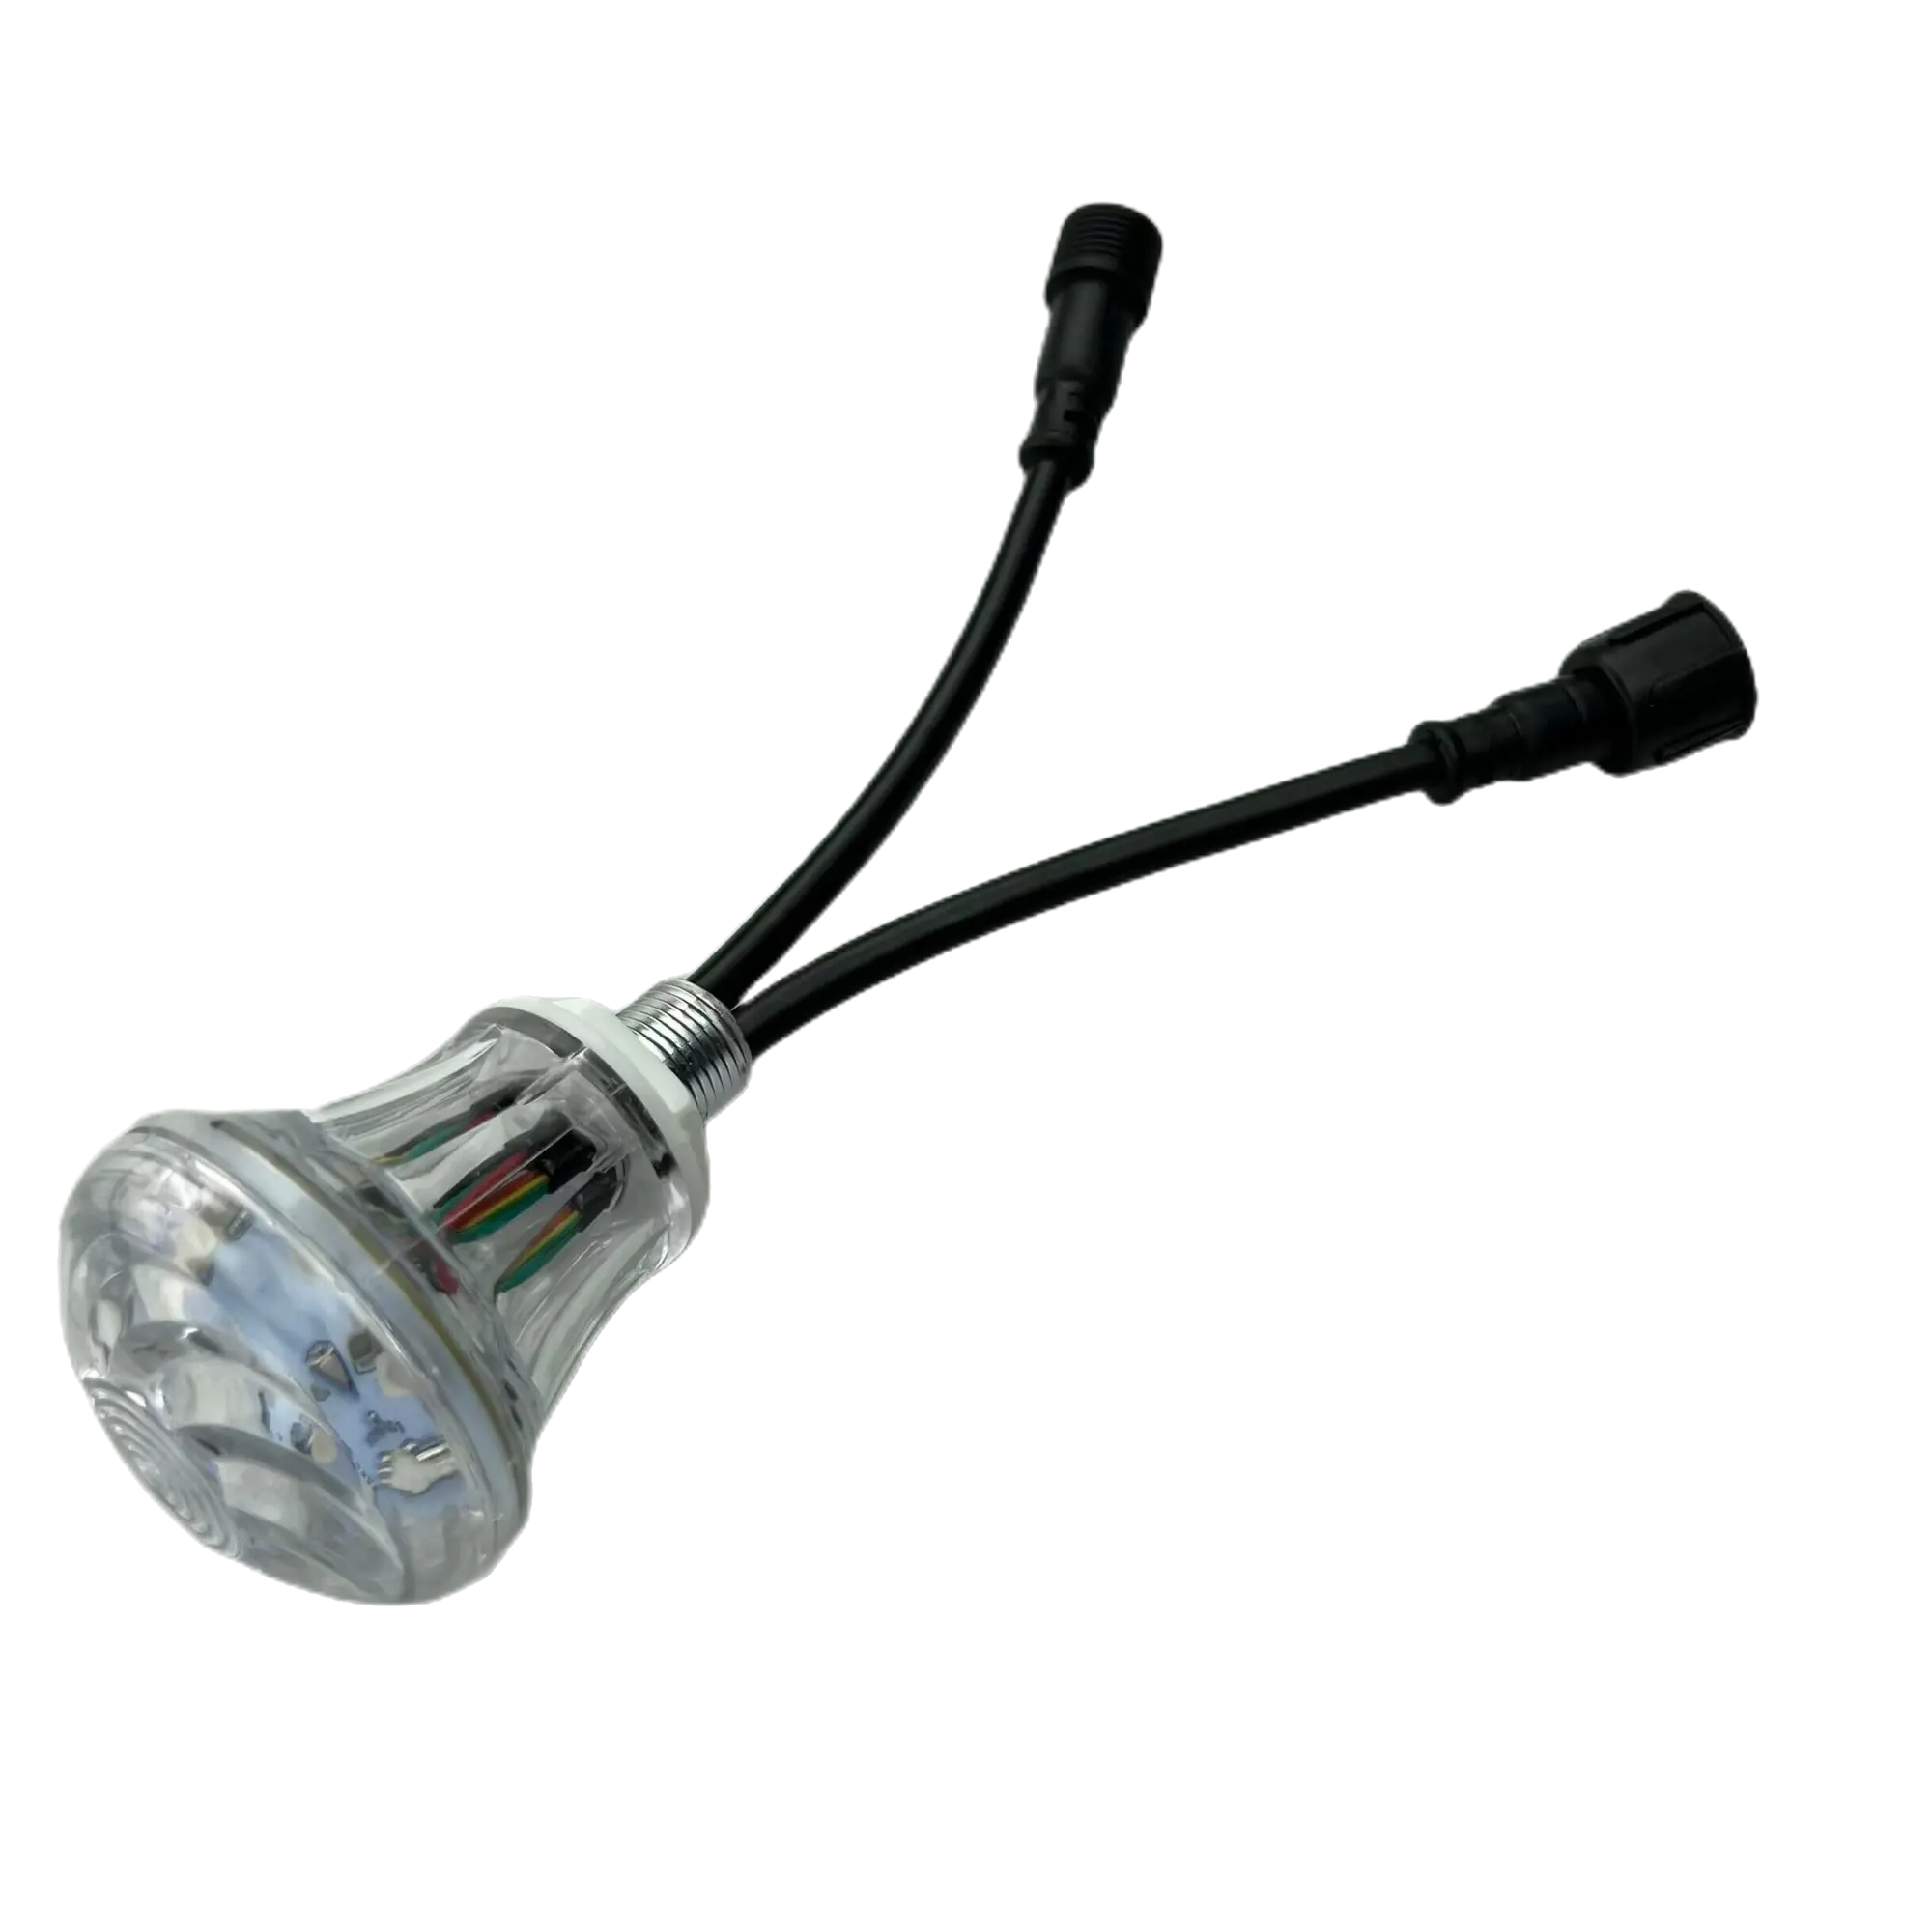 مصباح حديقة ملاهي Led ذكي RGB عجلة فيريس Led ذكي DC24V 60 60 LEDs/xm512/WS2811 مصباح حديقة ملاهي Led درجة IP67